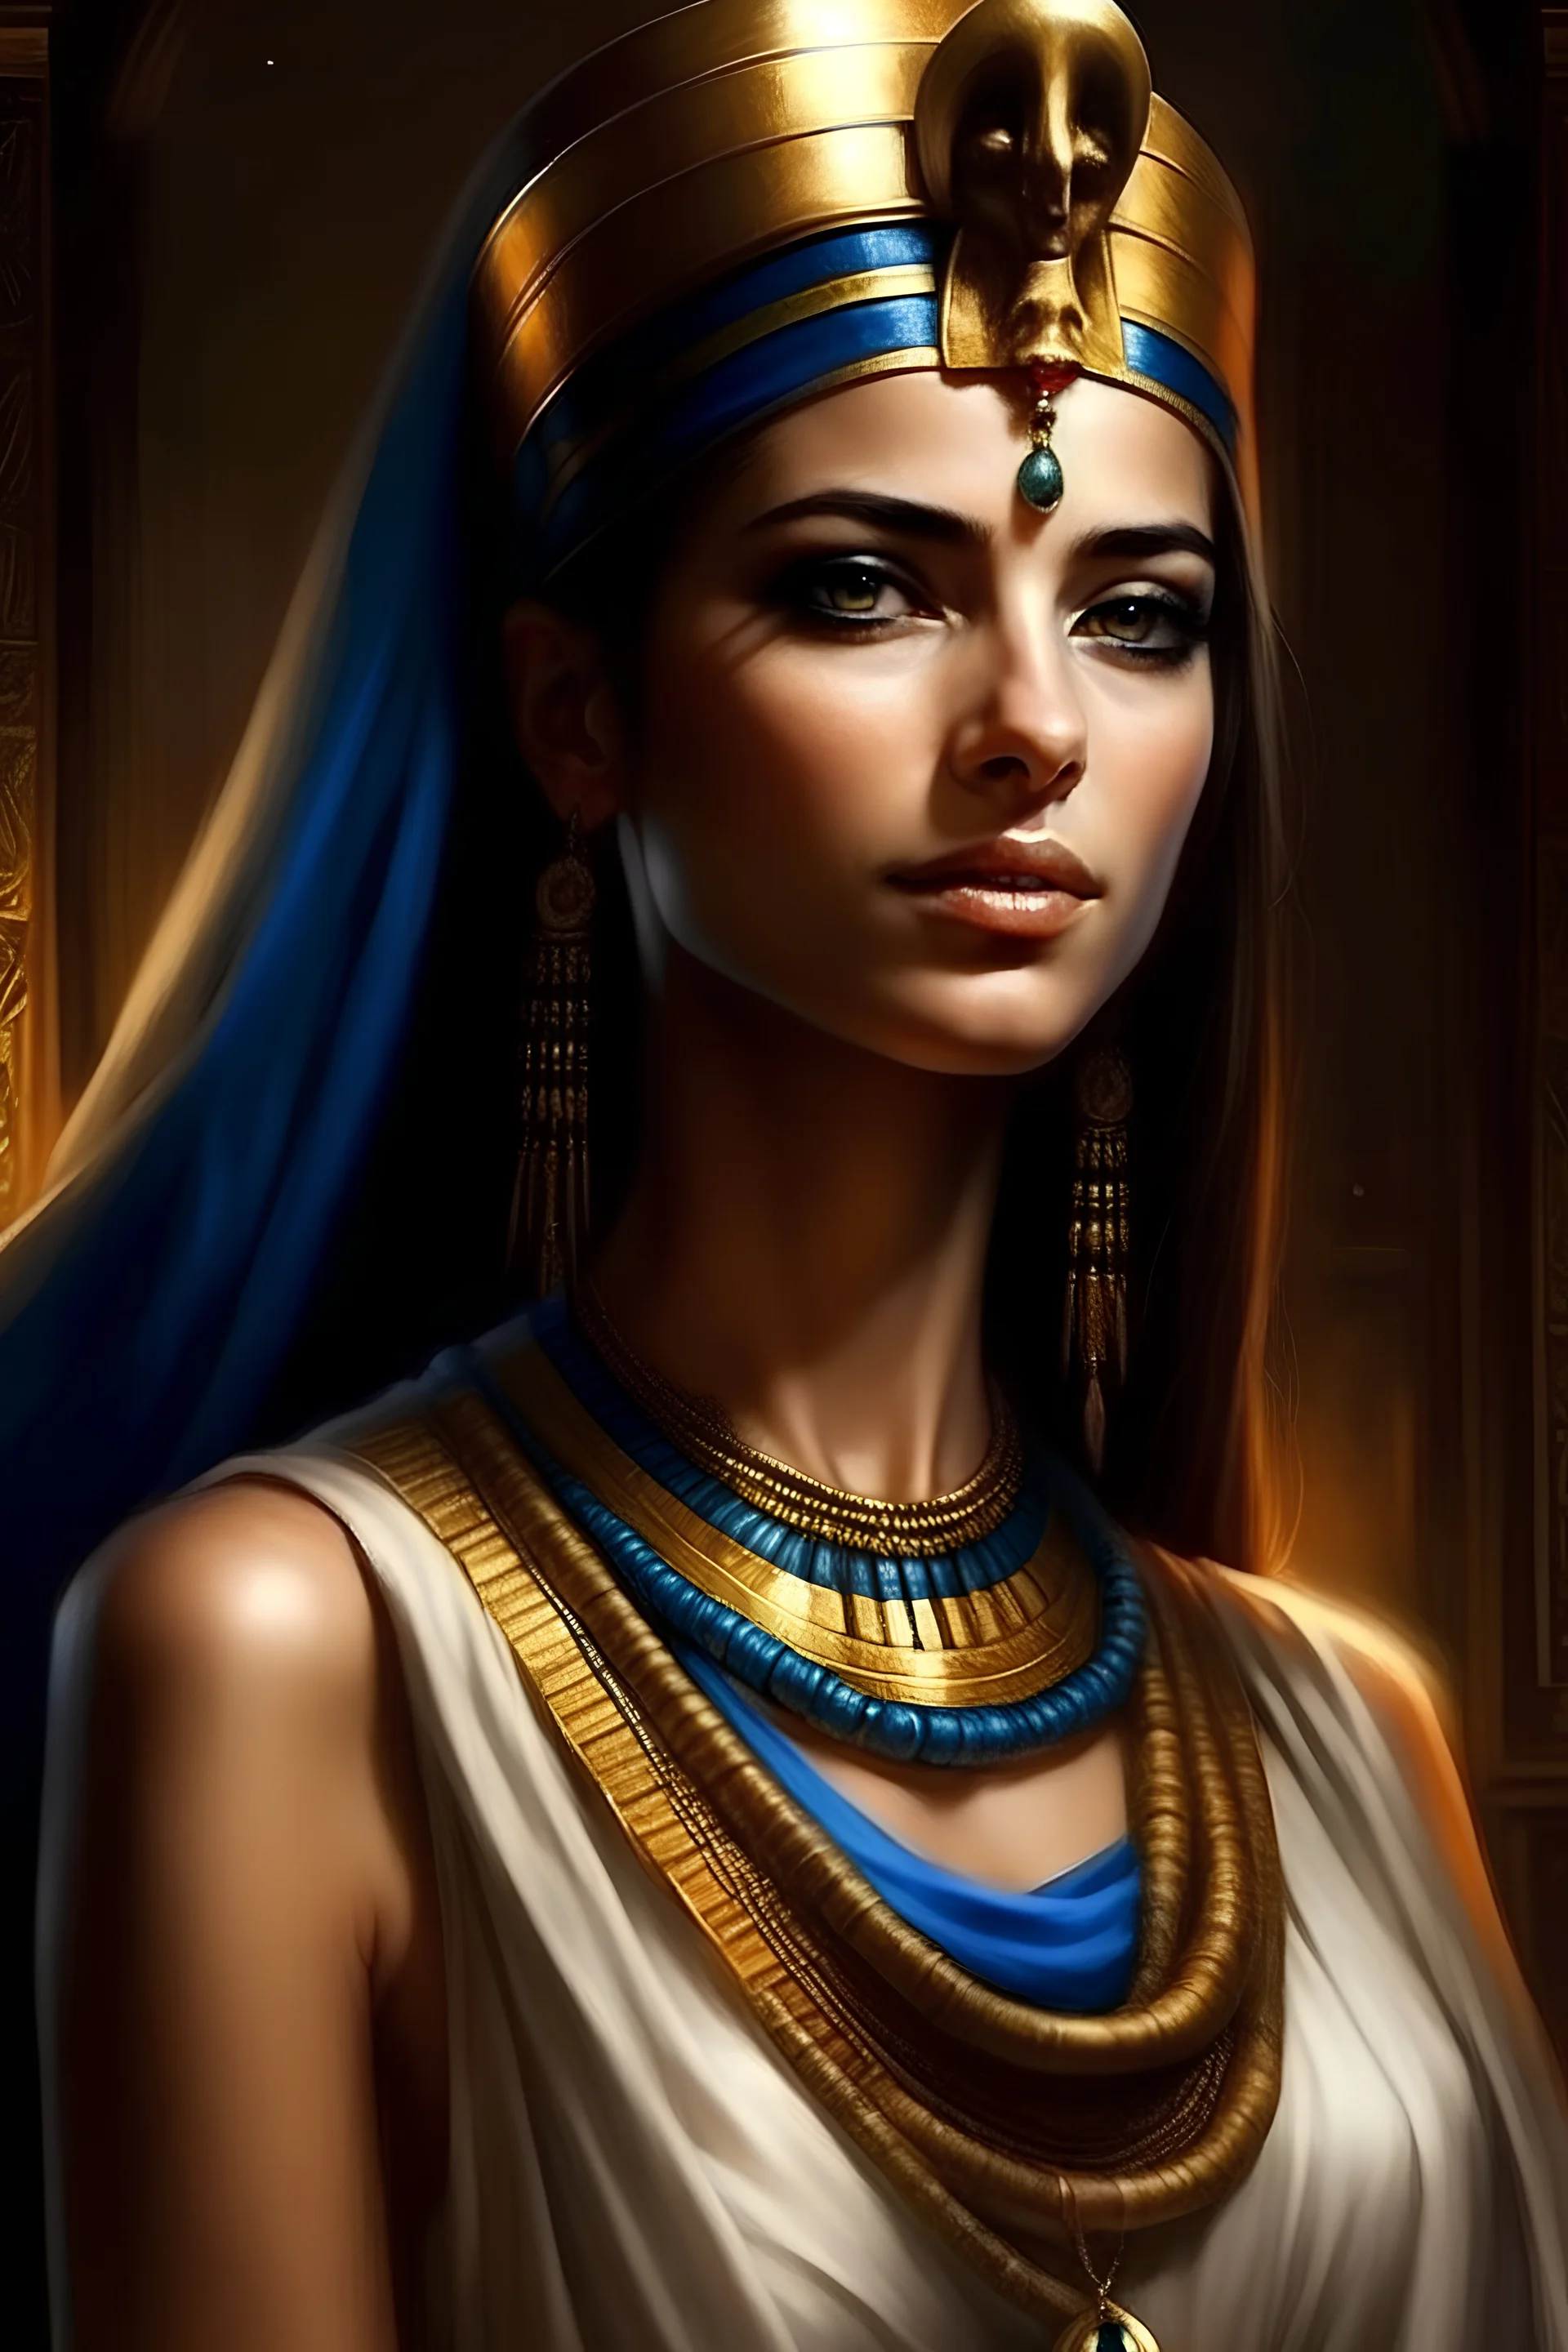 A beautiful Pharaonic woman